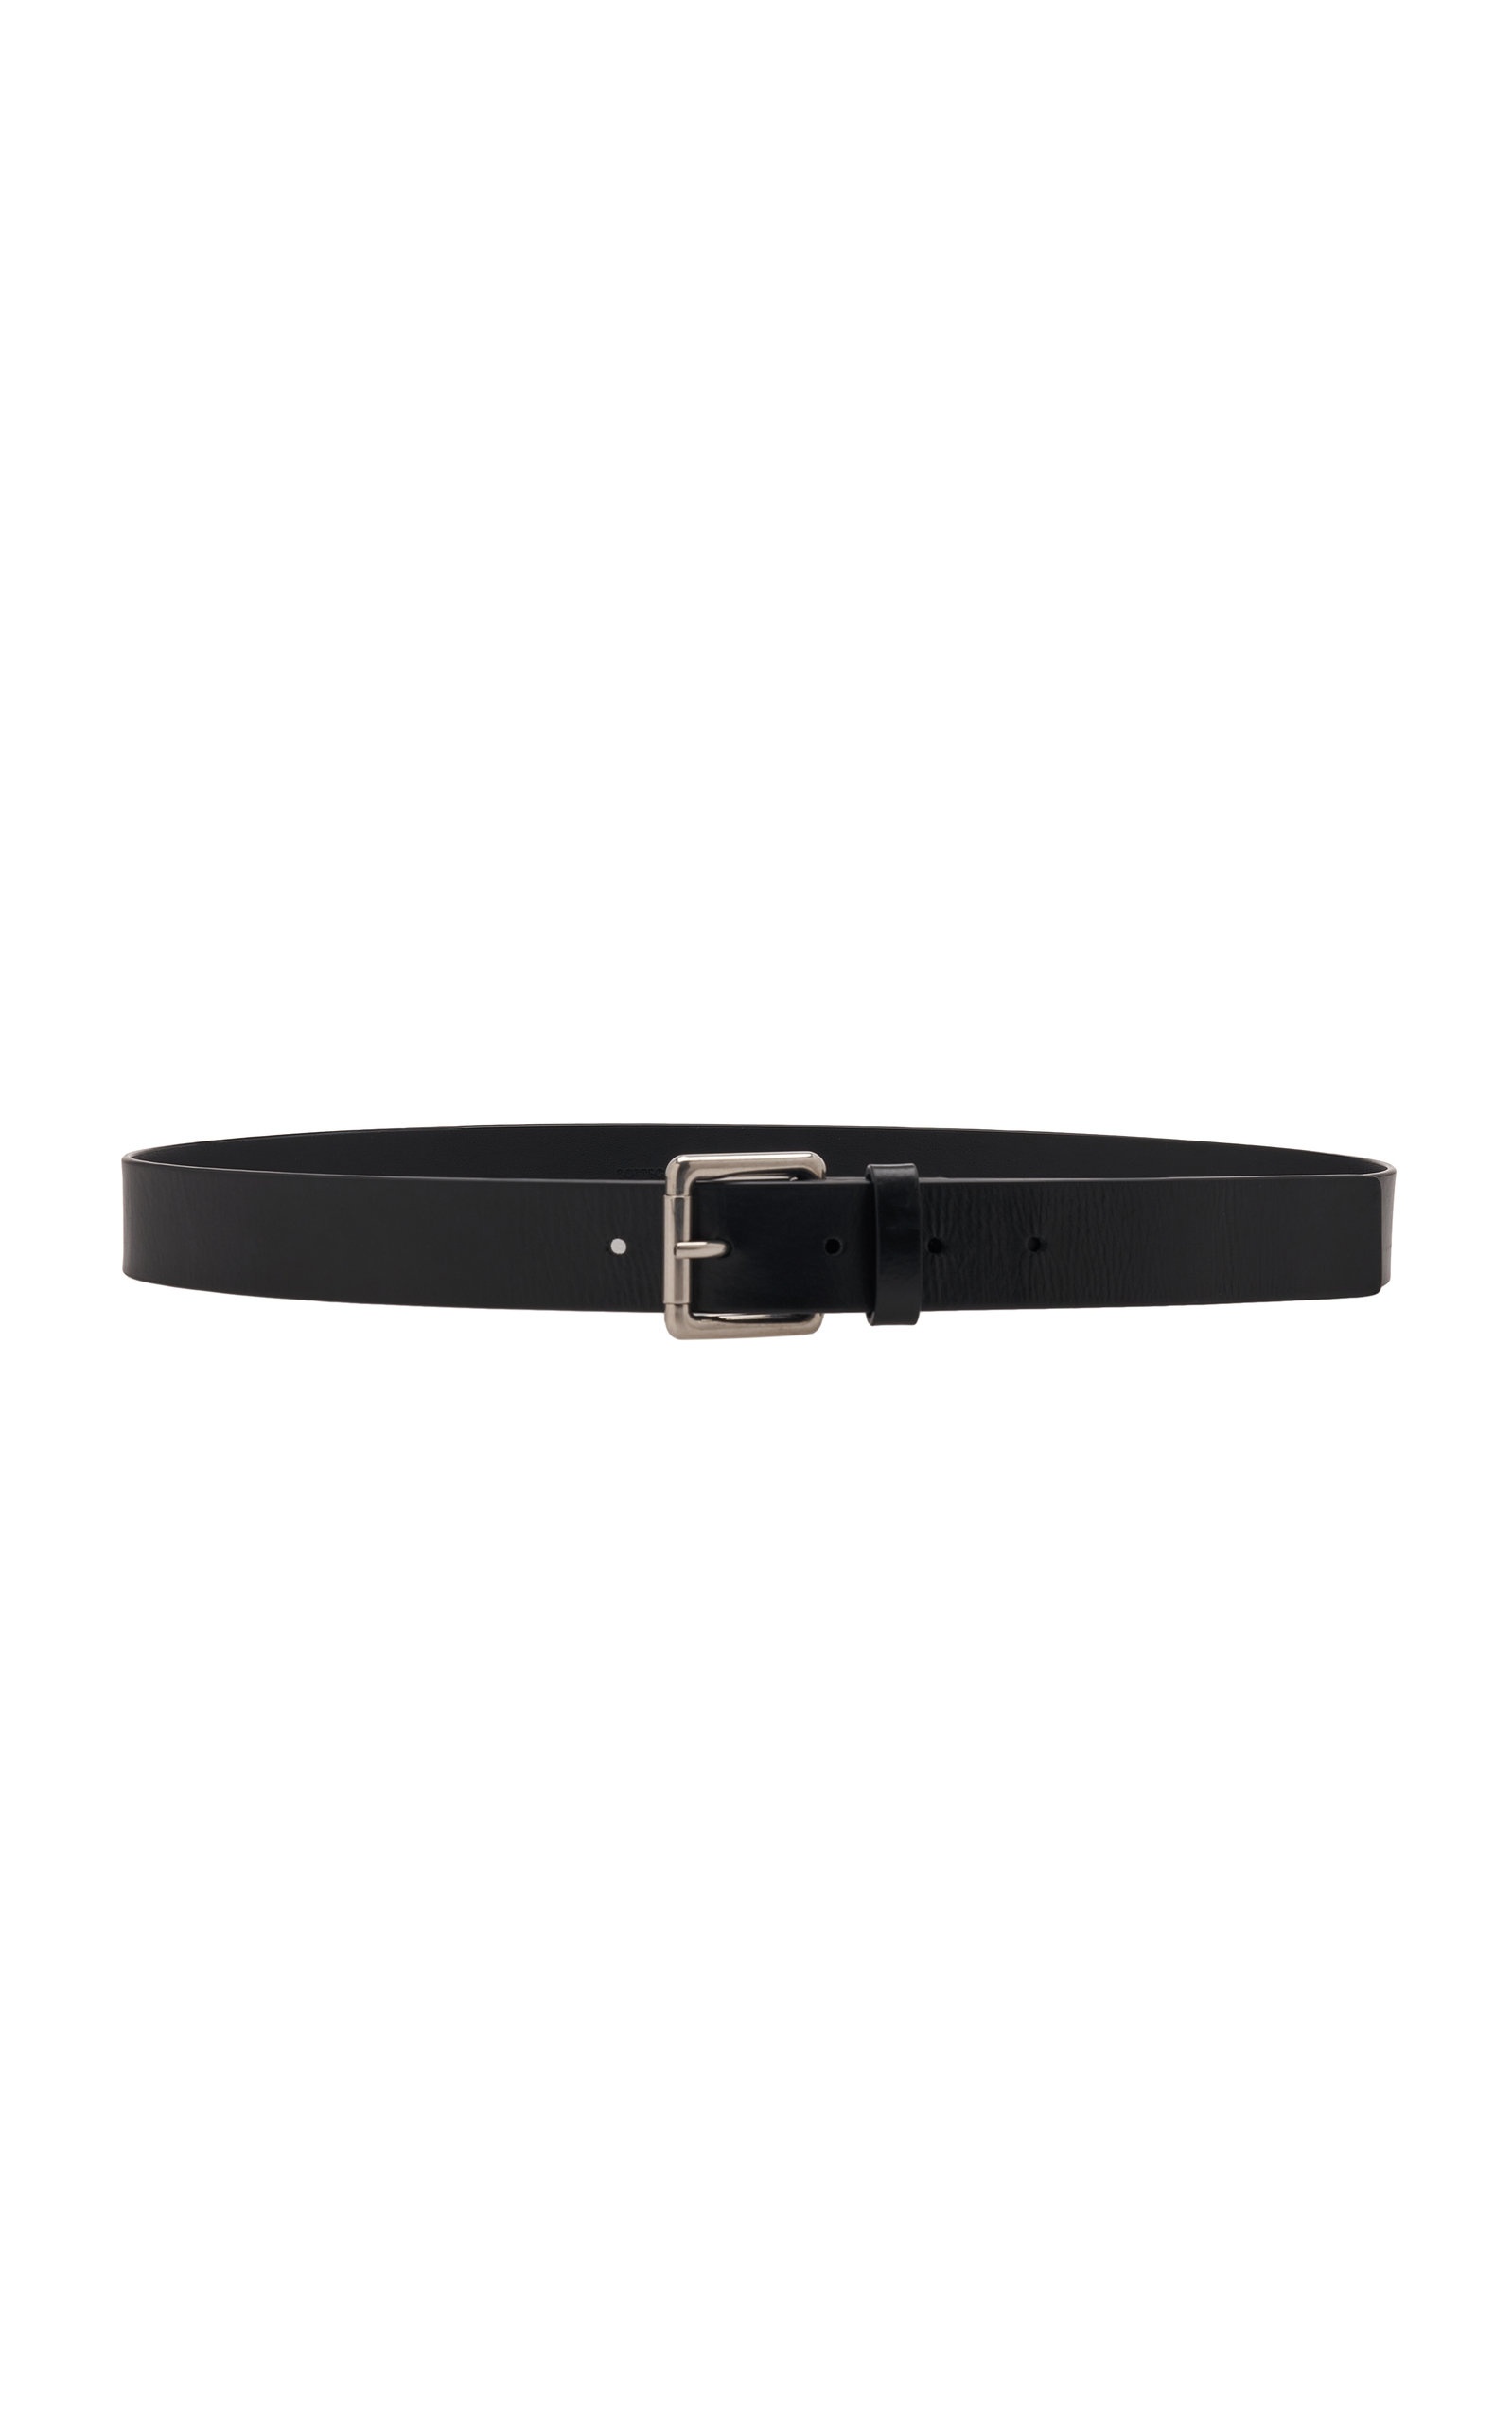 Cassette Pouch Leather Waist Belt black - 6